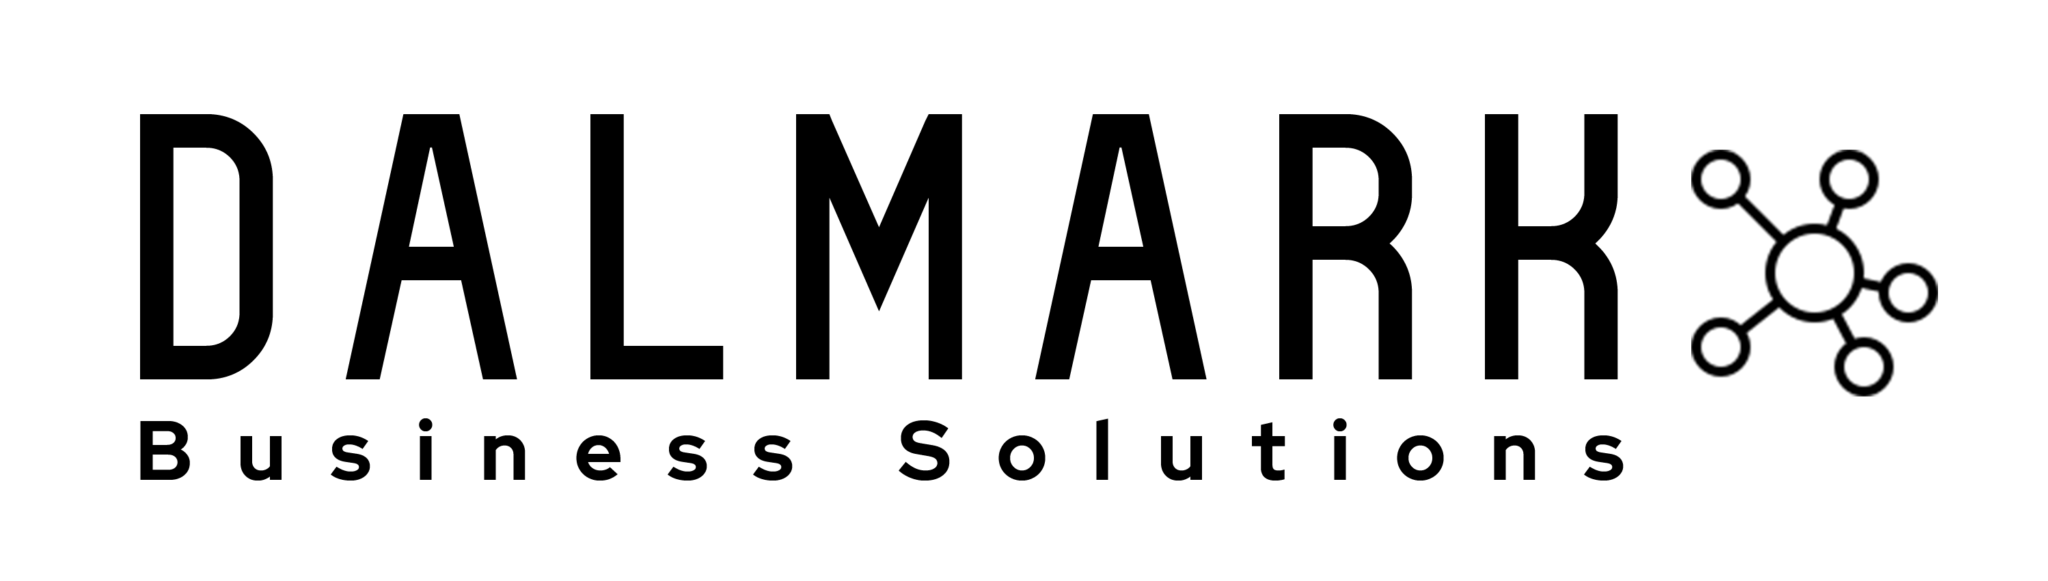 Dalmark Logo Black